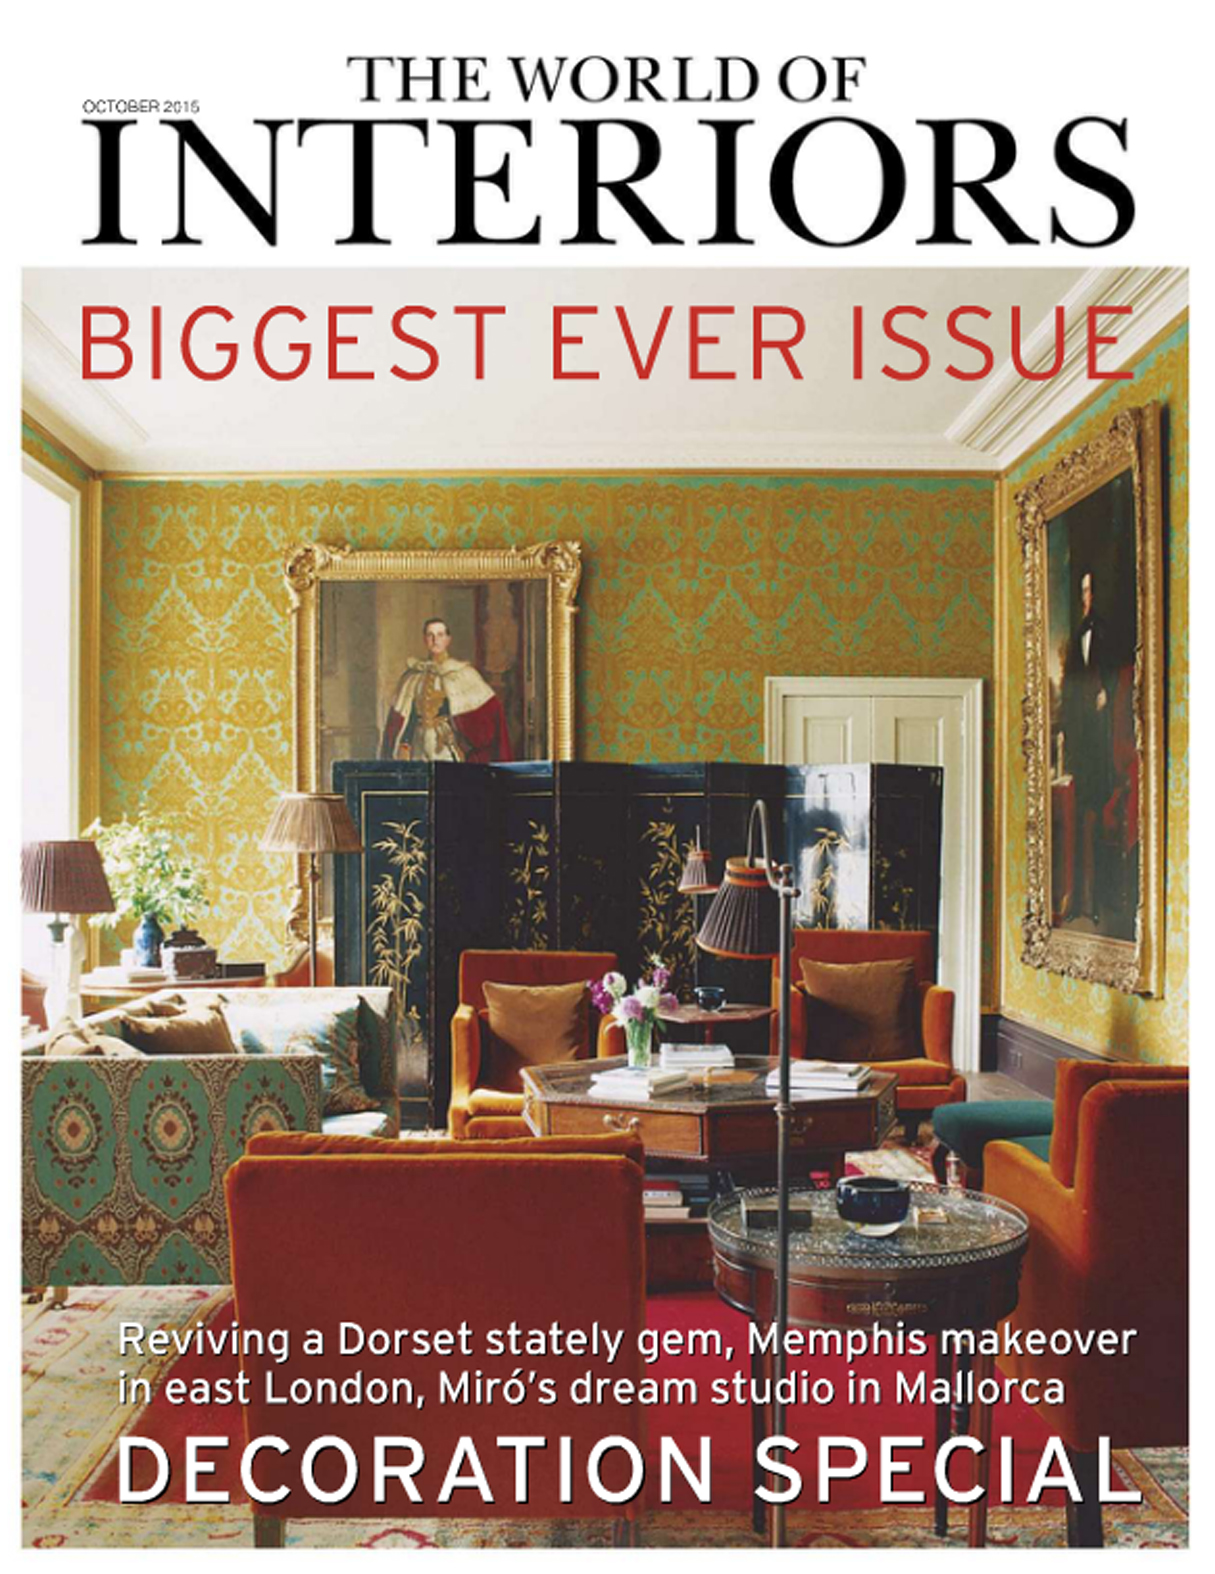 World of interiors magazine Kingham bespoke kitchen design feature October 2015